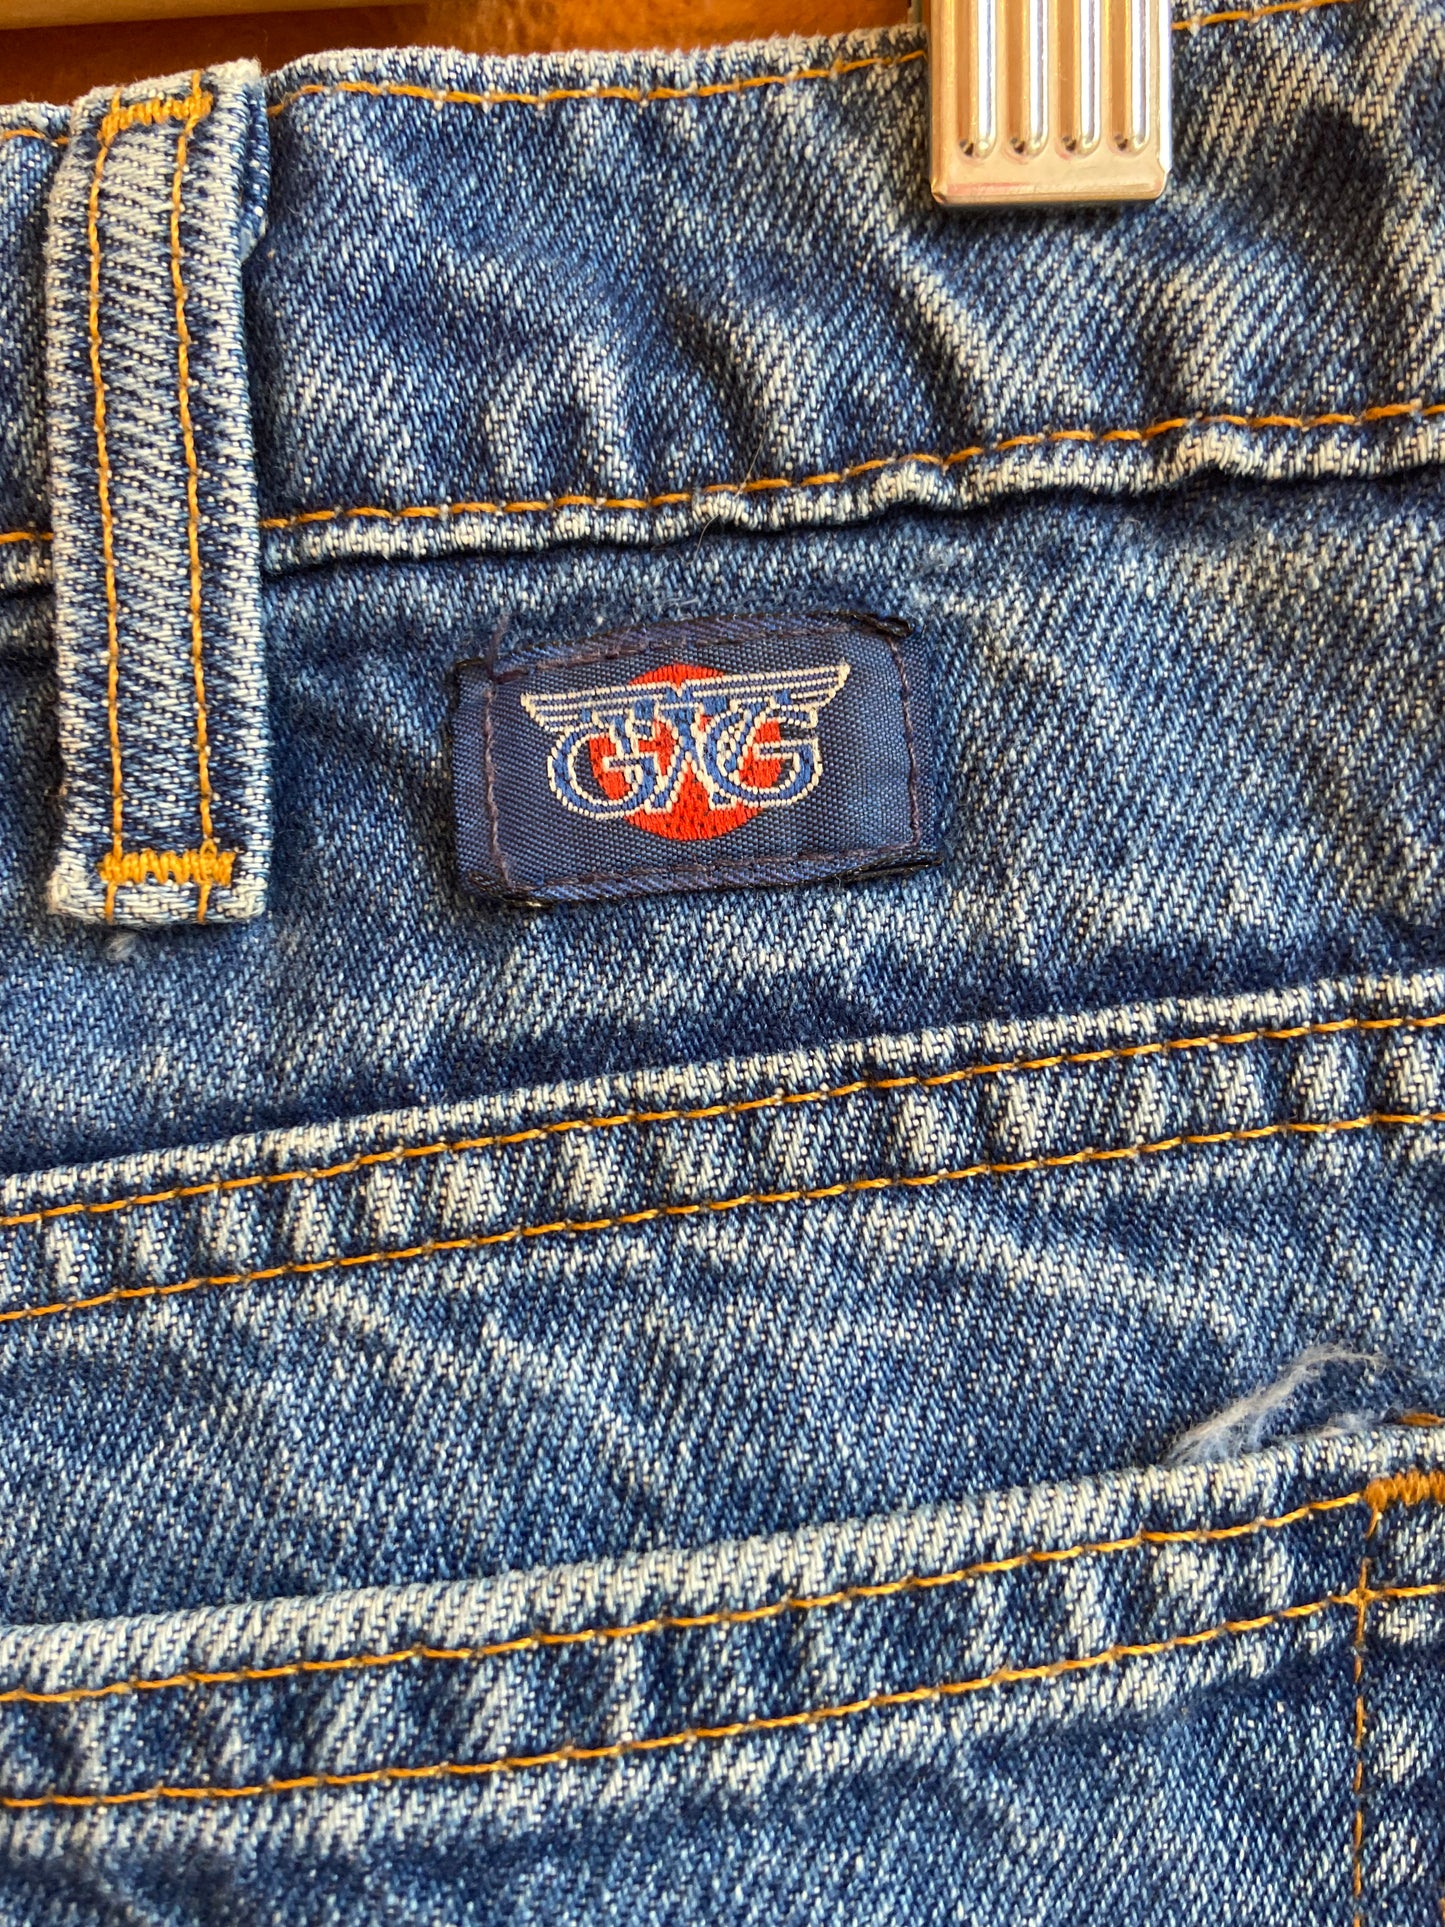 80’s GWG Jeans